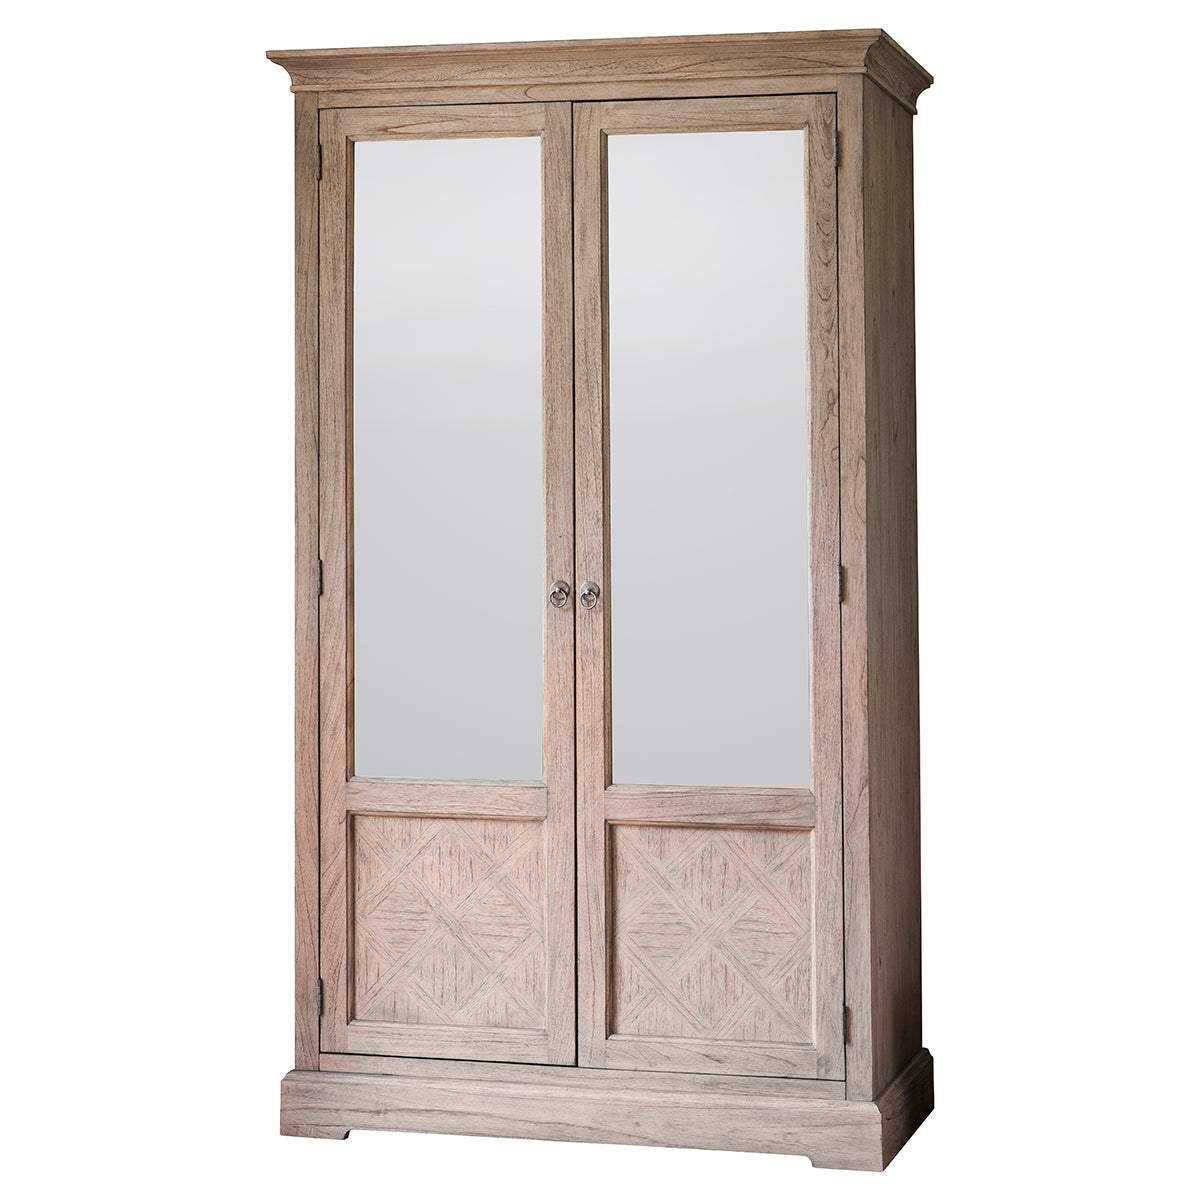 A Belsford 2 Mirror Door Wardrobe 1112x606x1950mm for interior decor.